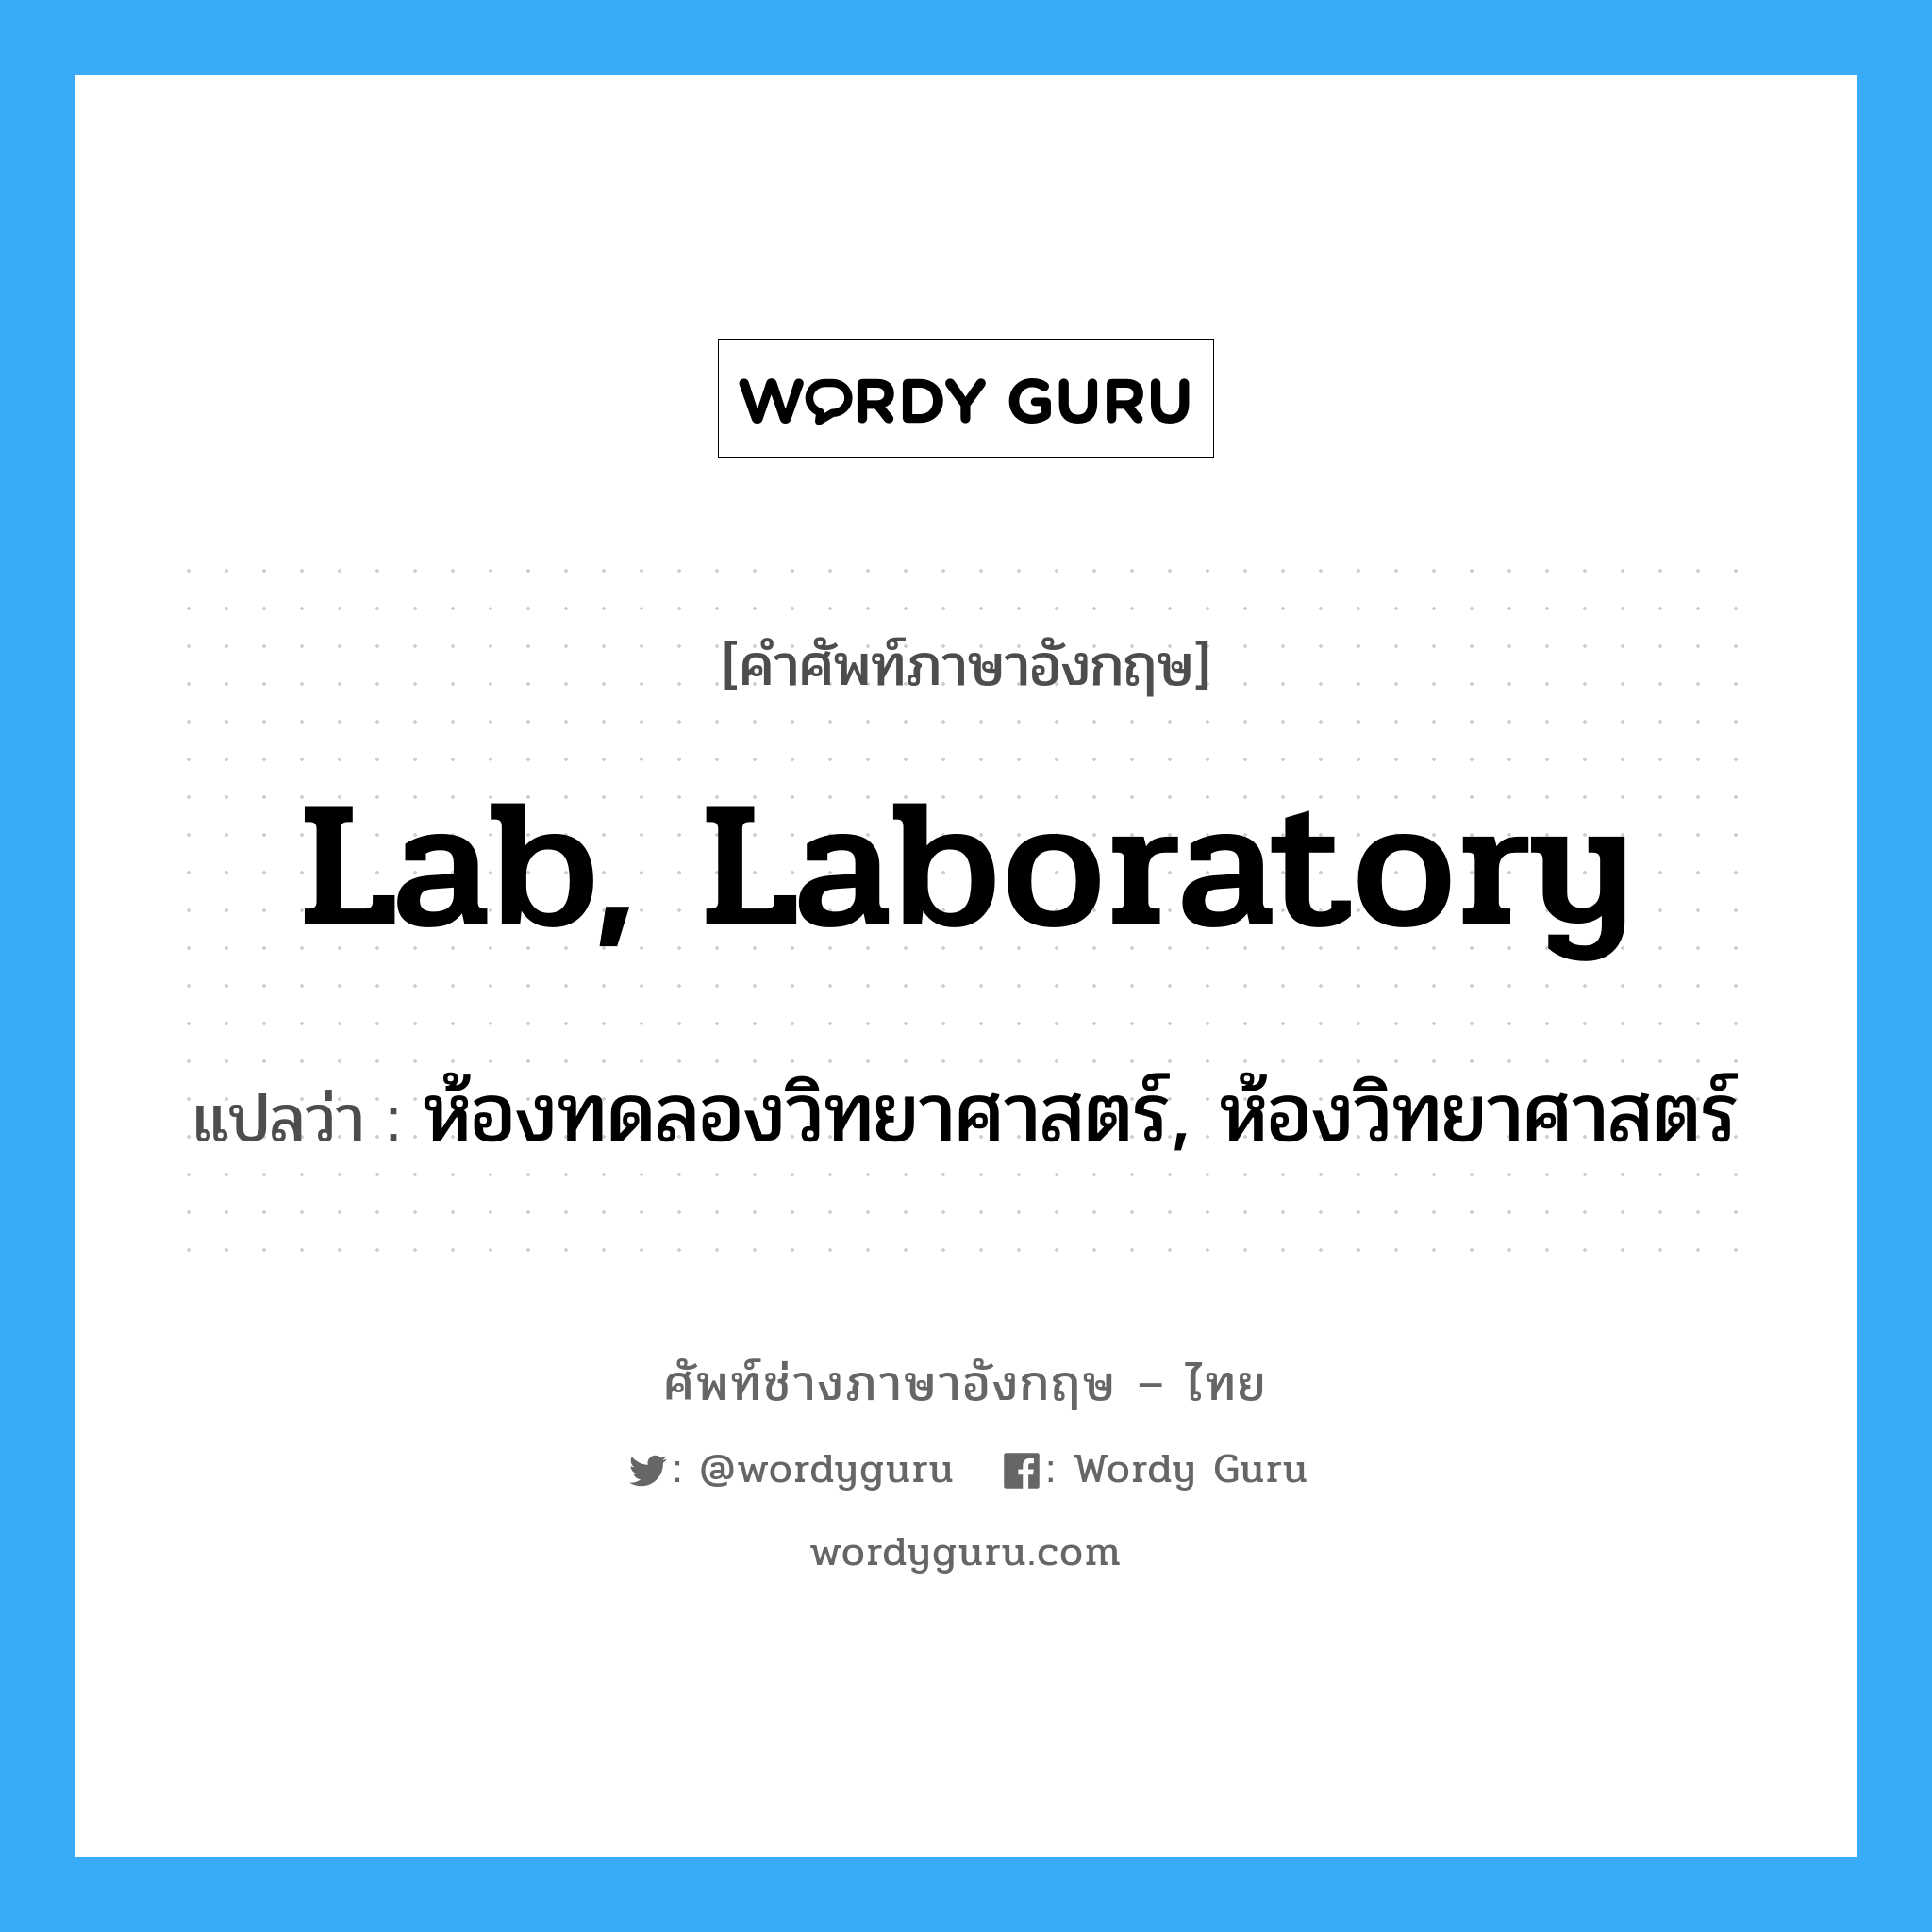 lab, laboratory แปลว่า?, คำศัพท์ช่างภาษาอังกฤษ - ไทย lab, laboratory คำศัพท์ภาษาอังกฤษ lab, laboratory แปลว่า ห้องทดลองวิทยาศาสตร์, ห้องวิทยาศาสตร์